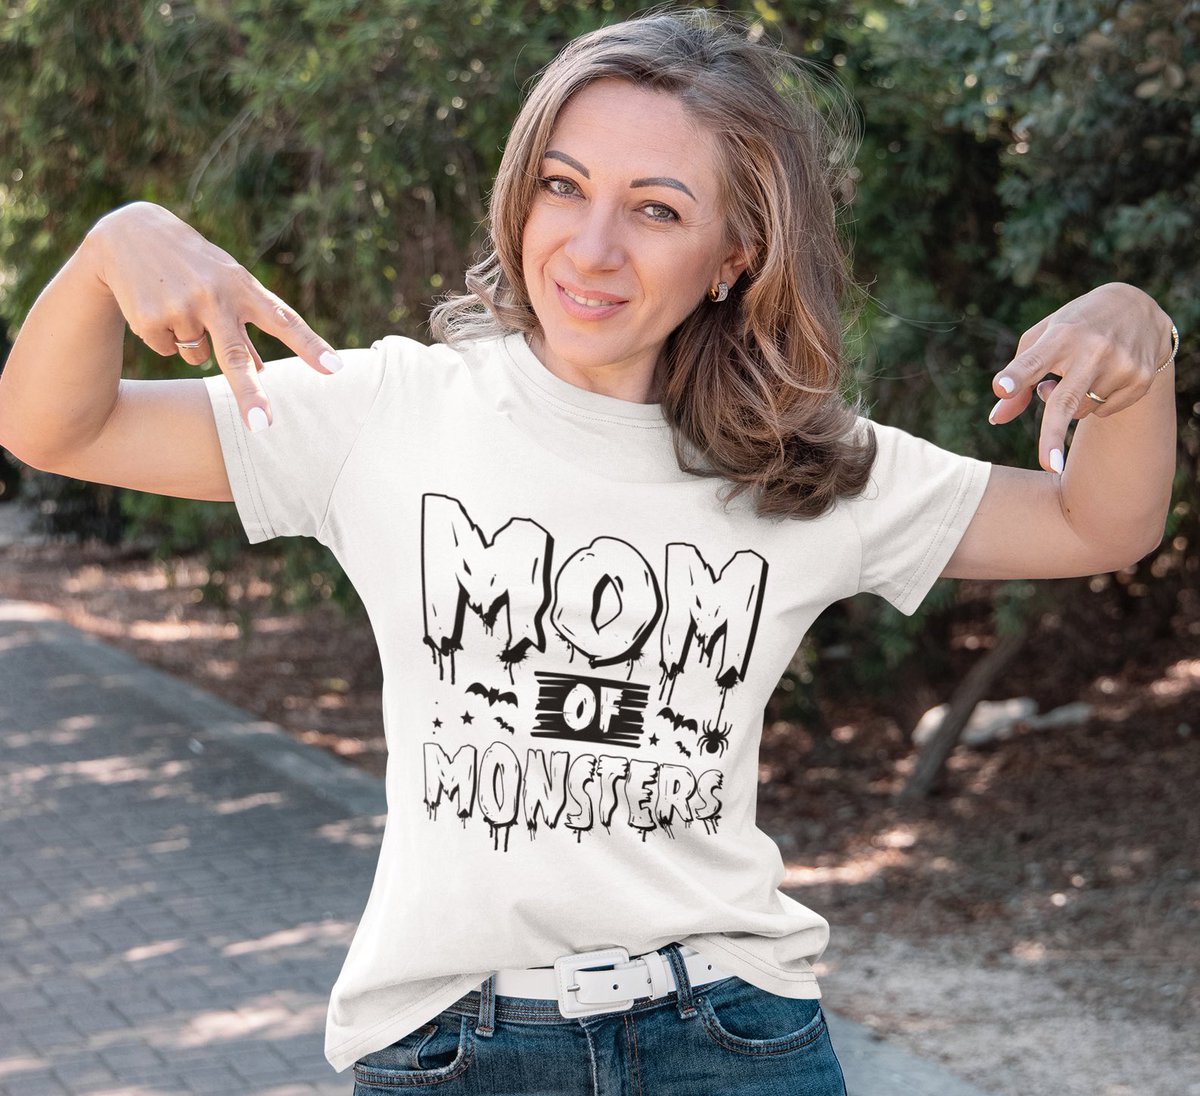 Mom of monsters funny mothers day T-Shirt zazzle.com/z/a4cjq20j?rf=… via @zazzle
#MothersDayGifts #MothersDayLove #mothersday #momlife #MommyClub #momofmonsters #supermom #zazzlemade